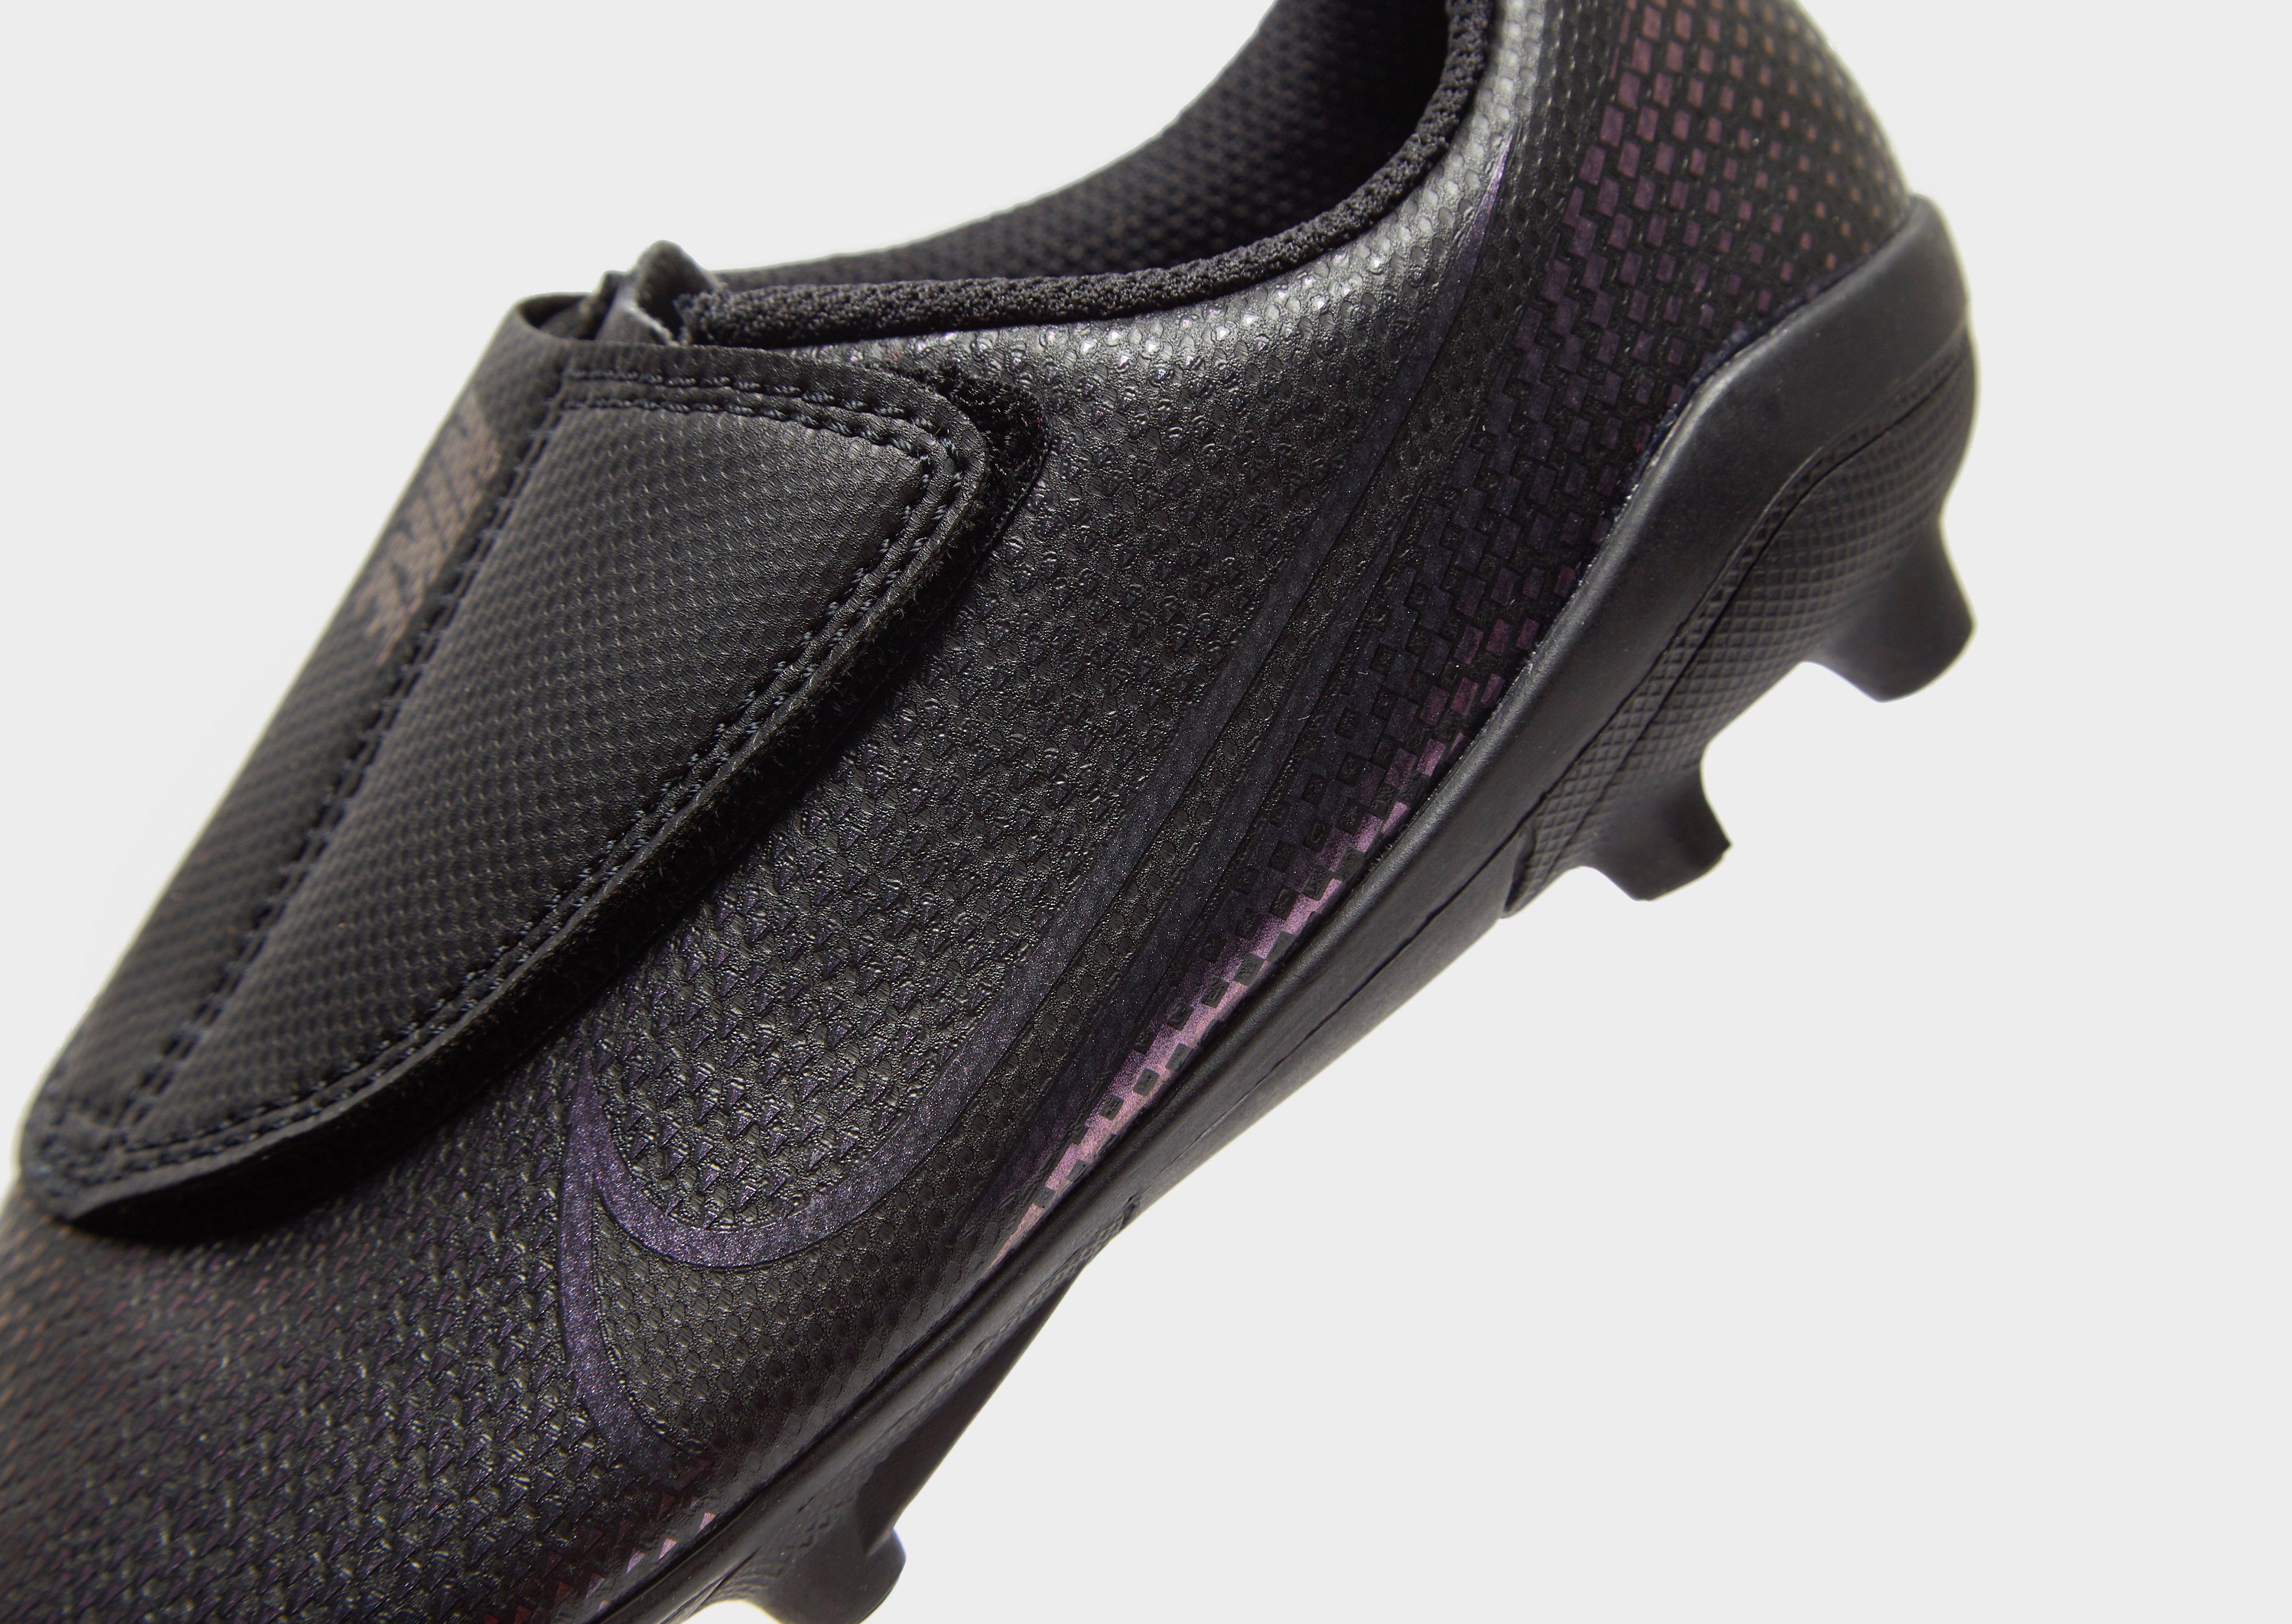 Nike Mercurial Vapor 13 Pro FG Football boots forthe field.